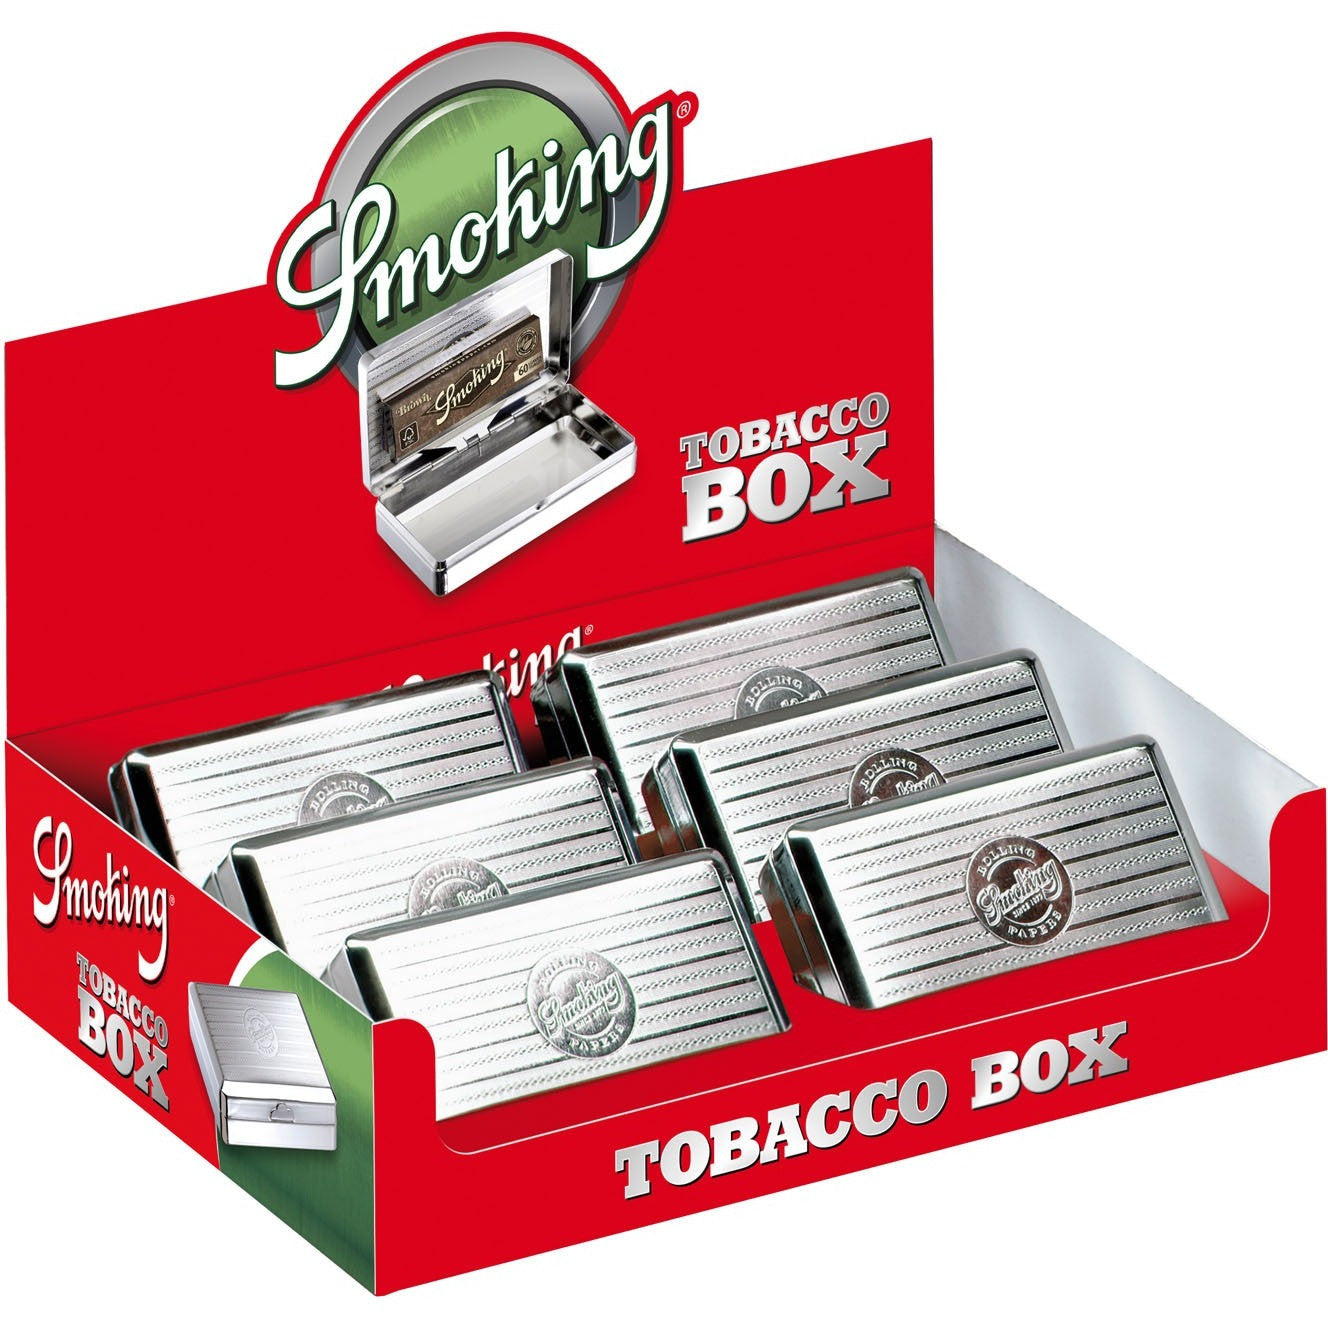 Smoking Tobacco Box